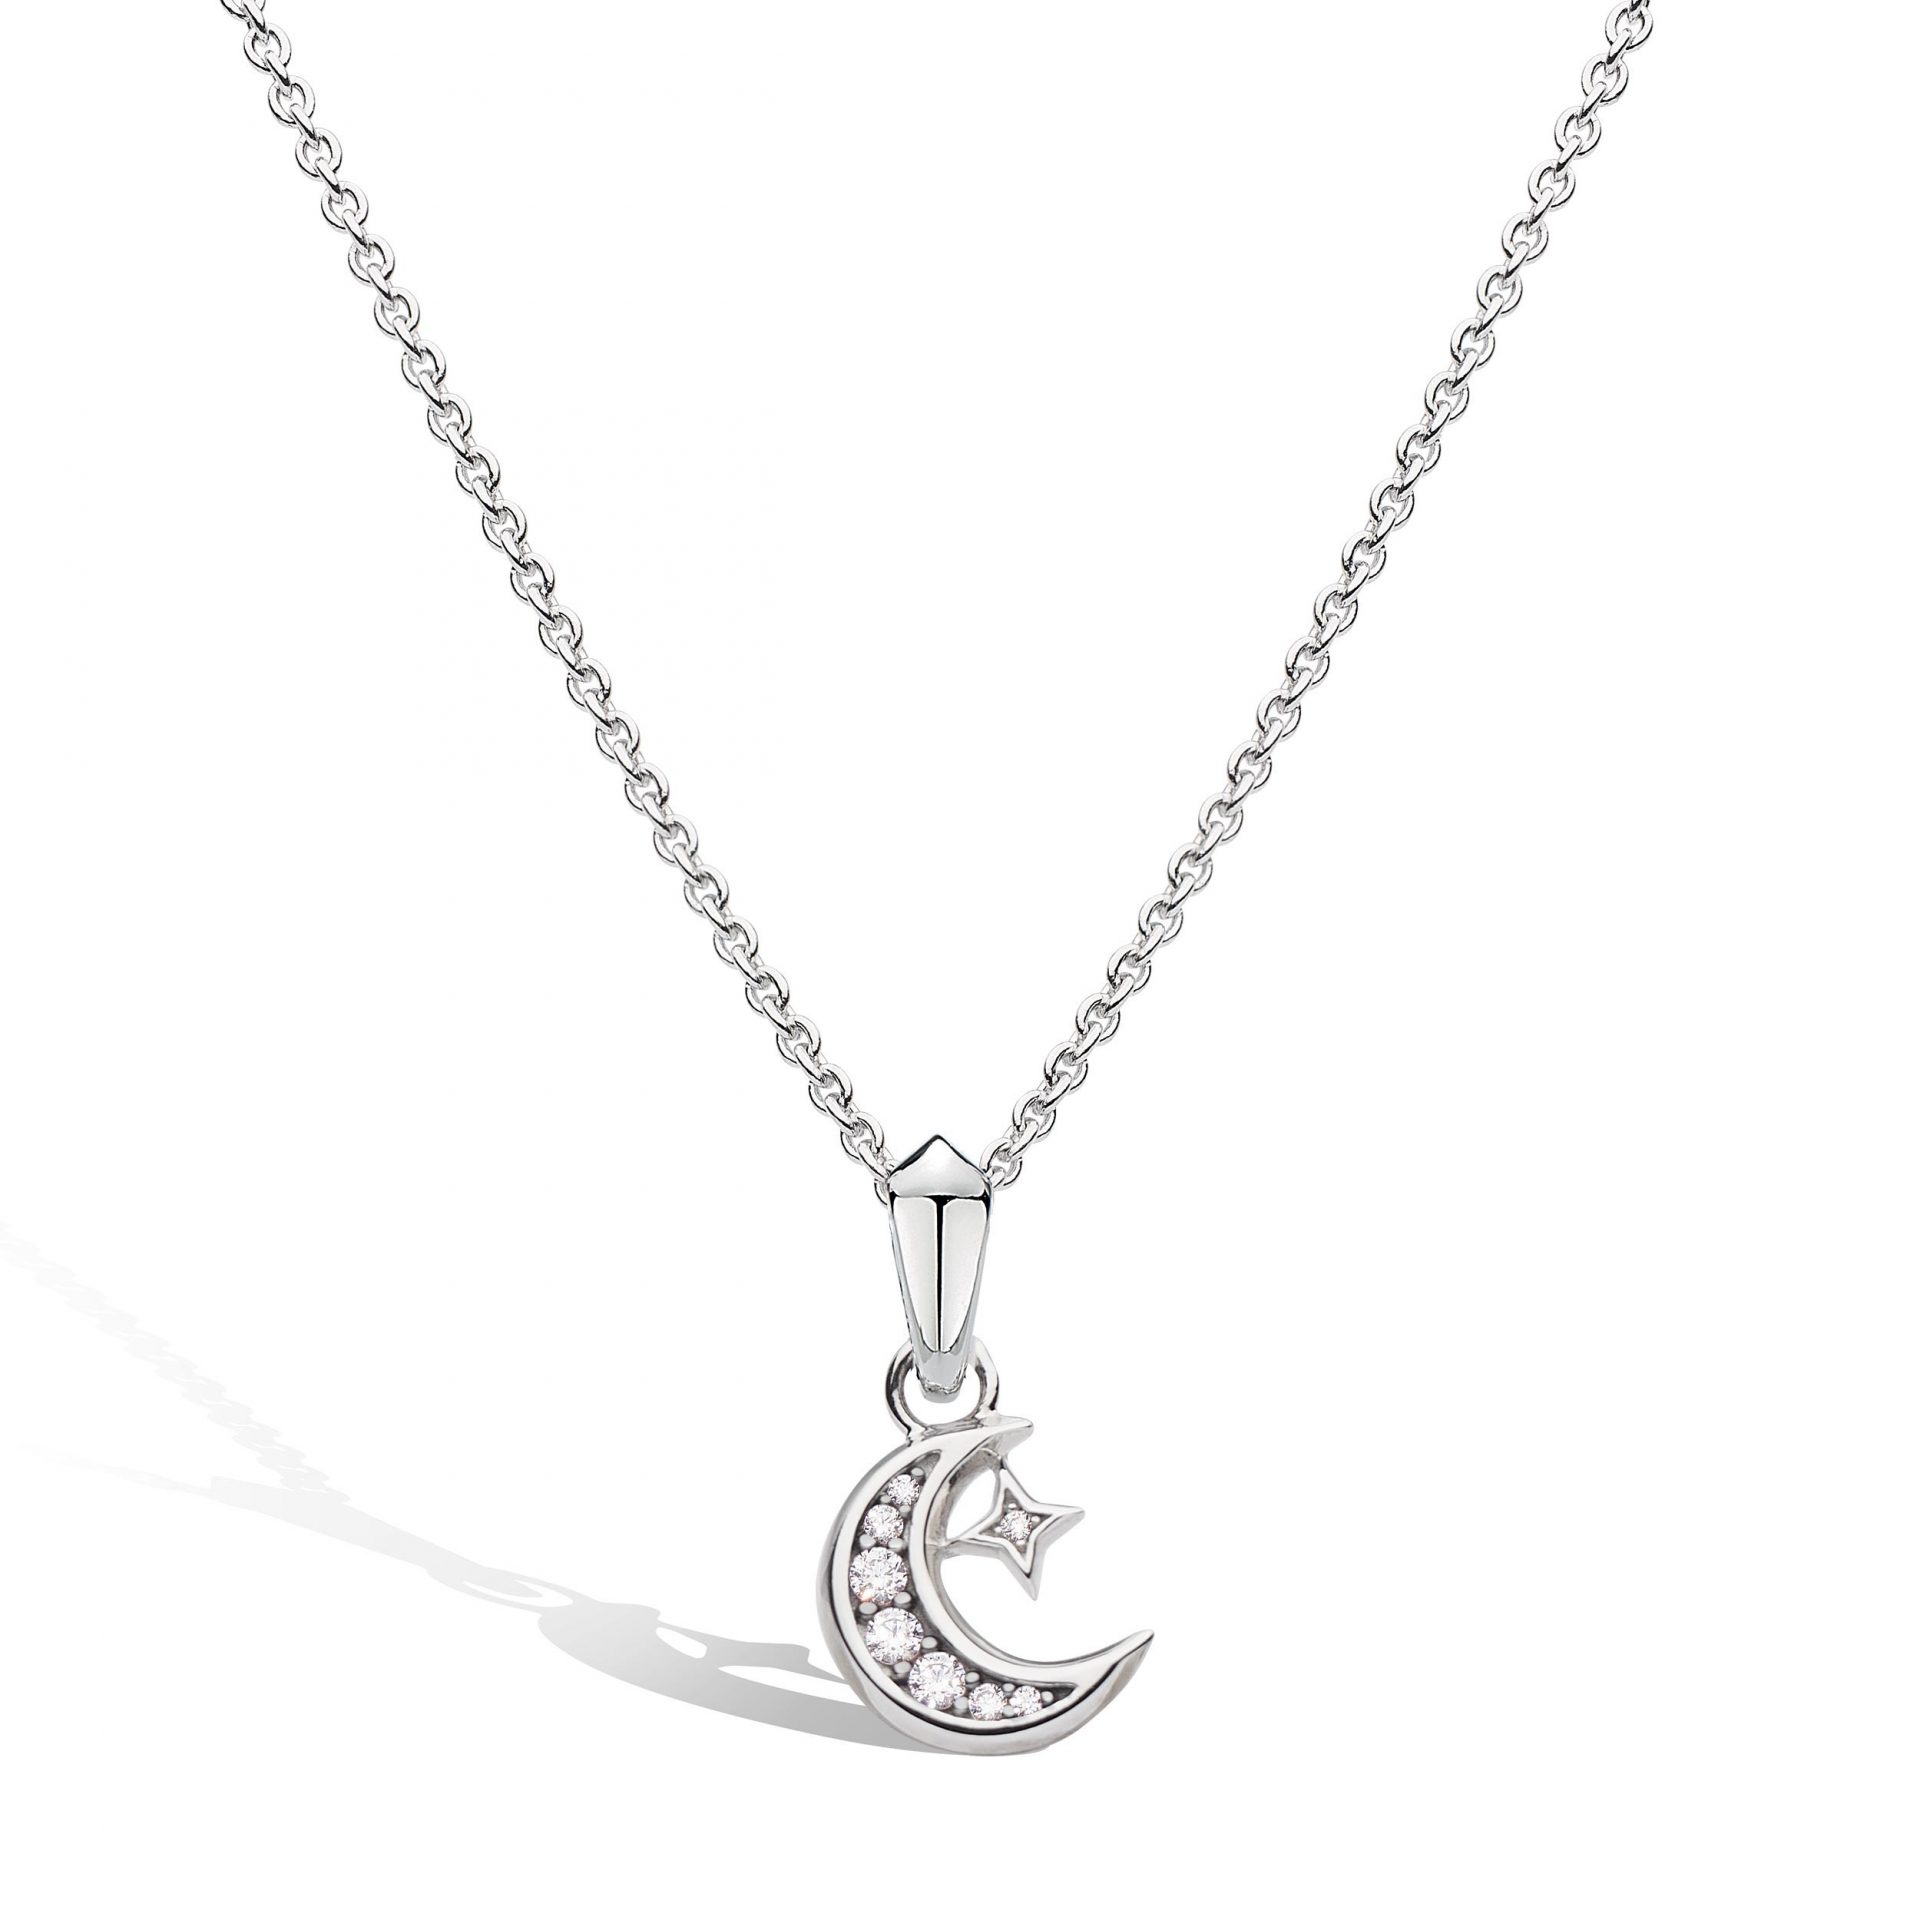 Crescent Moon Necklace in Gold | Blood Cancer UK Shop